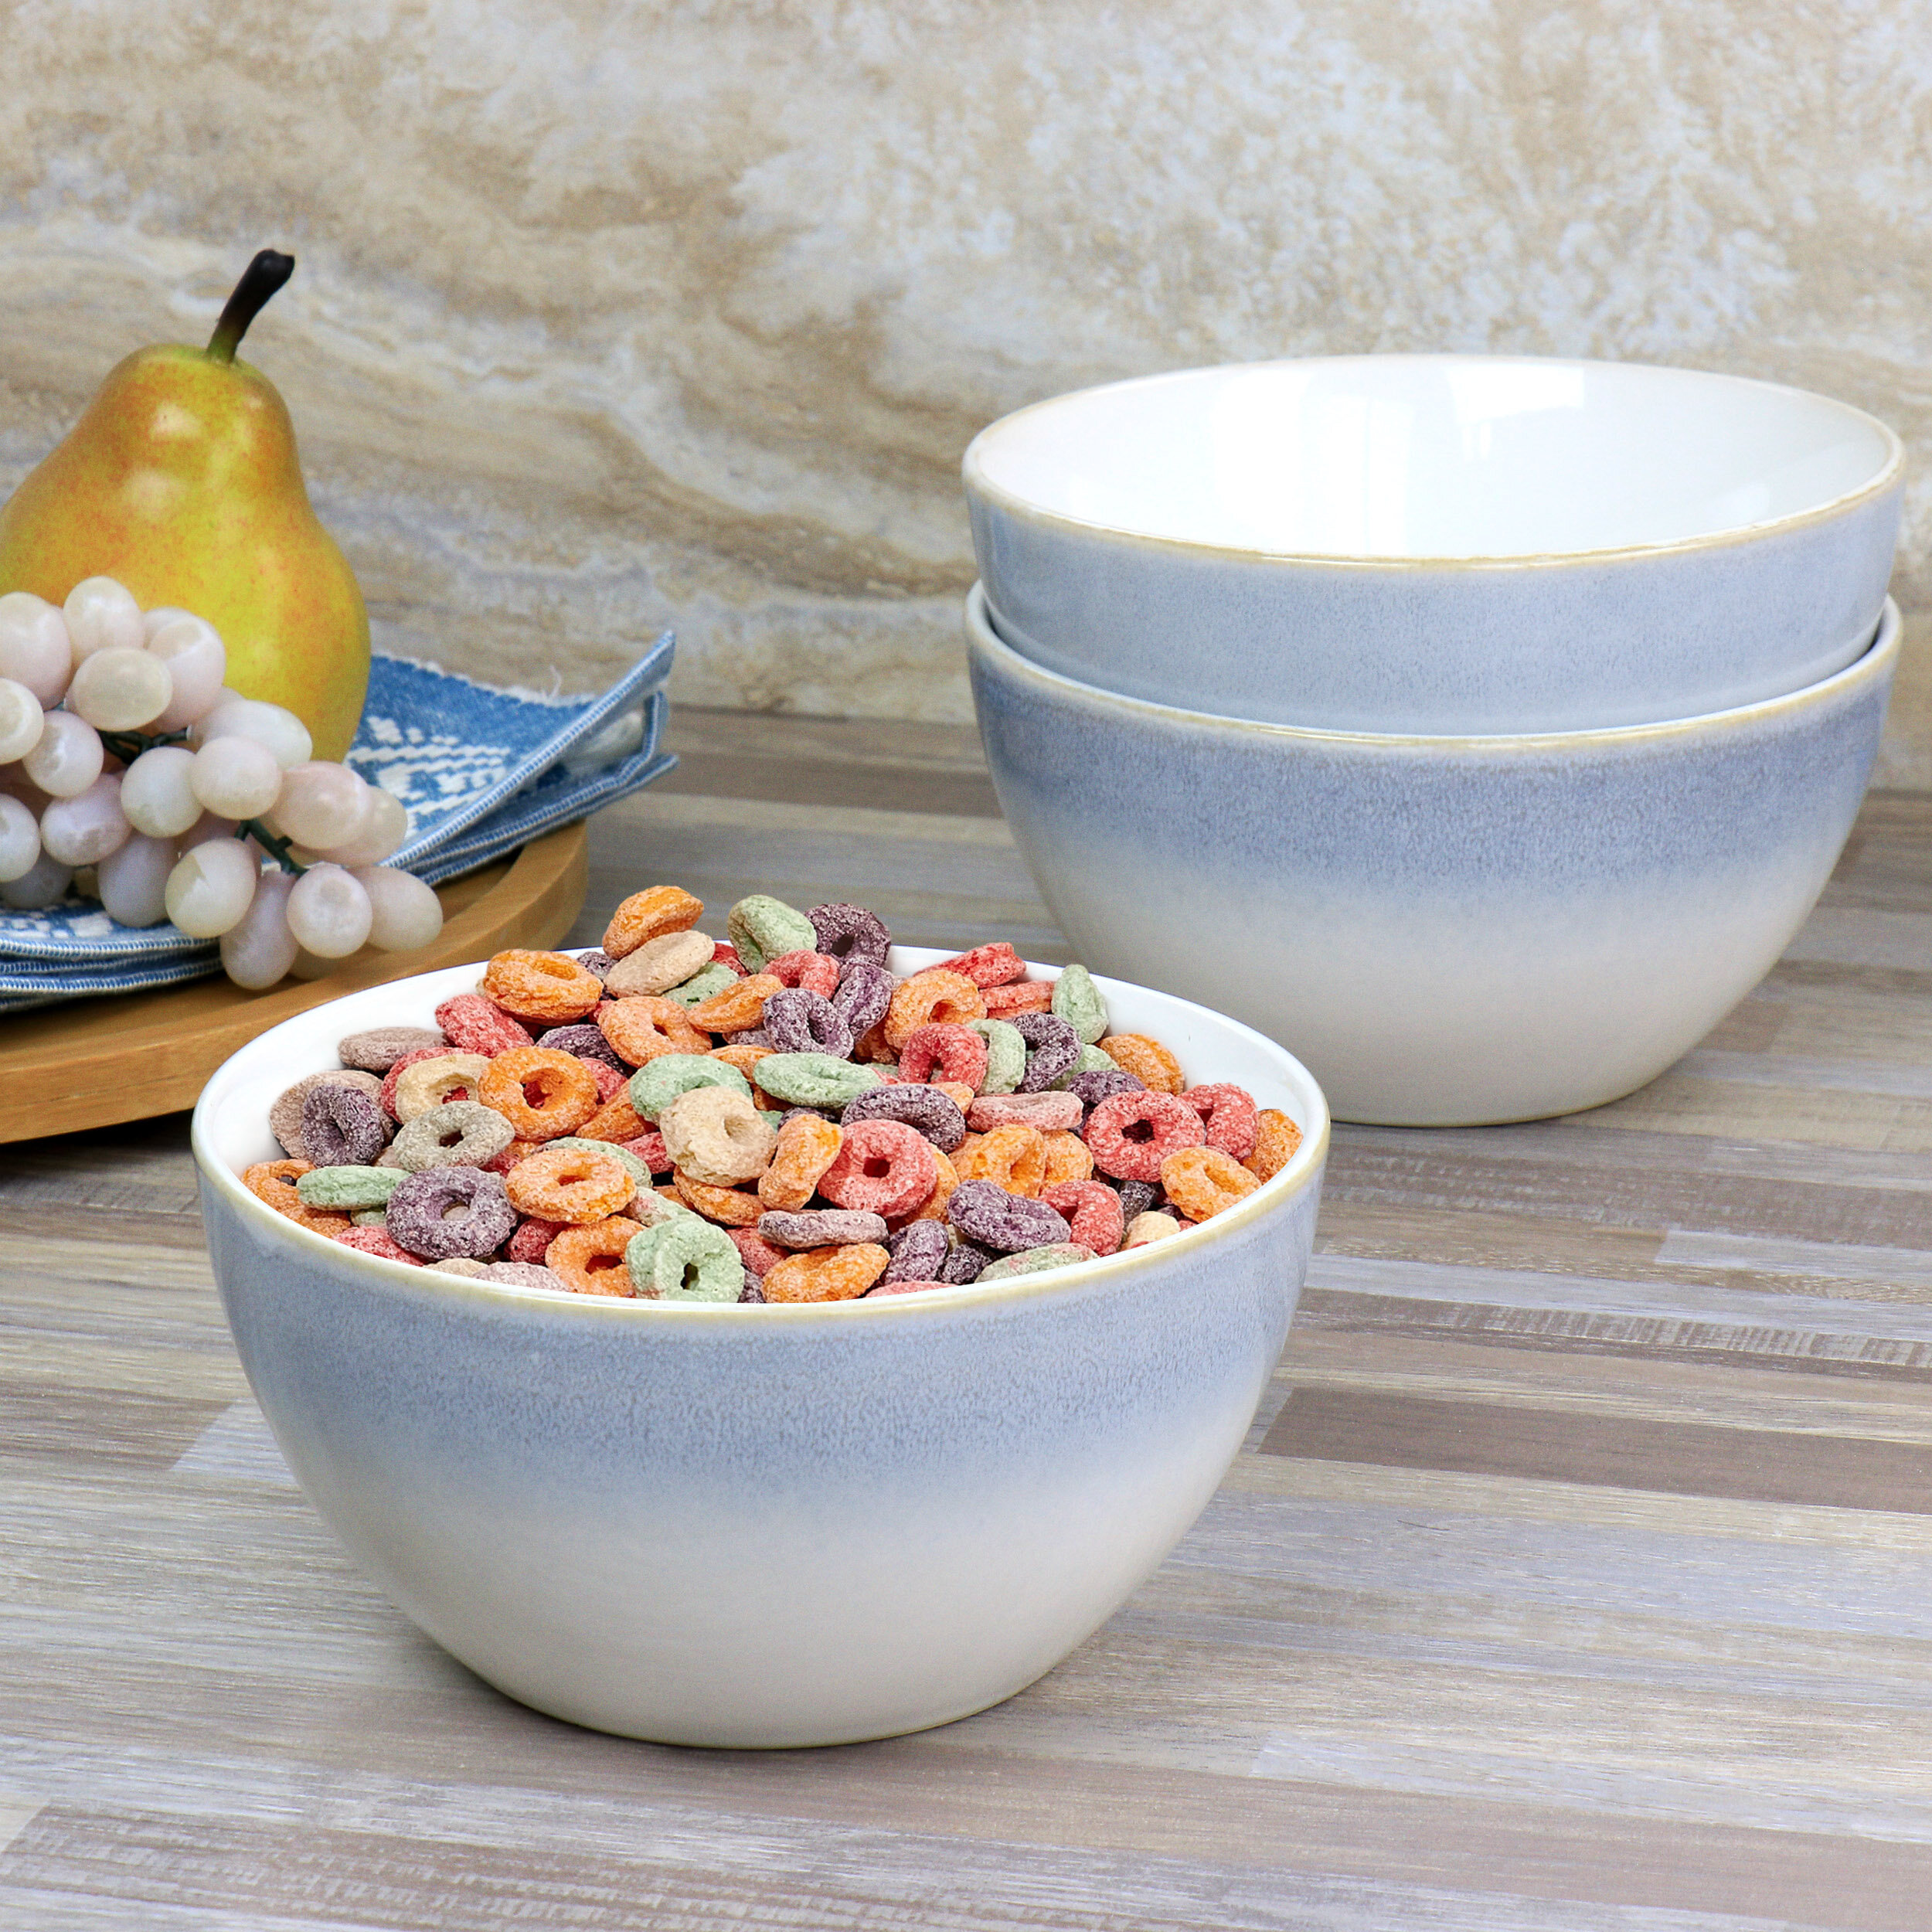 Martha Stewart Everyday - White 3-Piece Ceramic Bowl Set